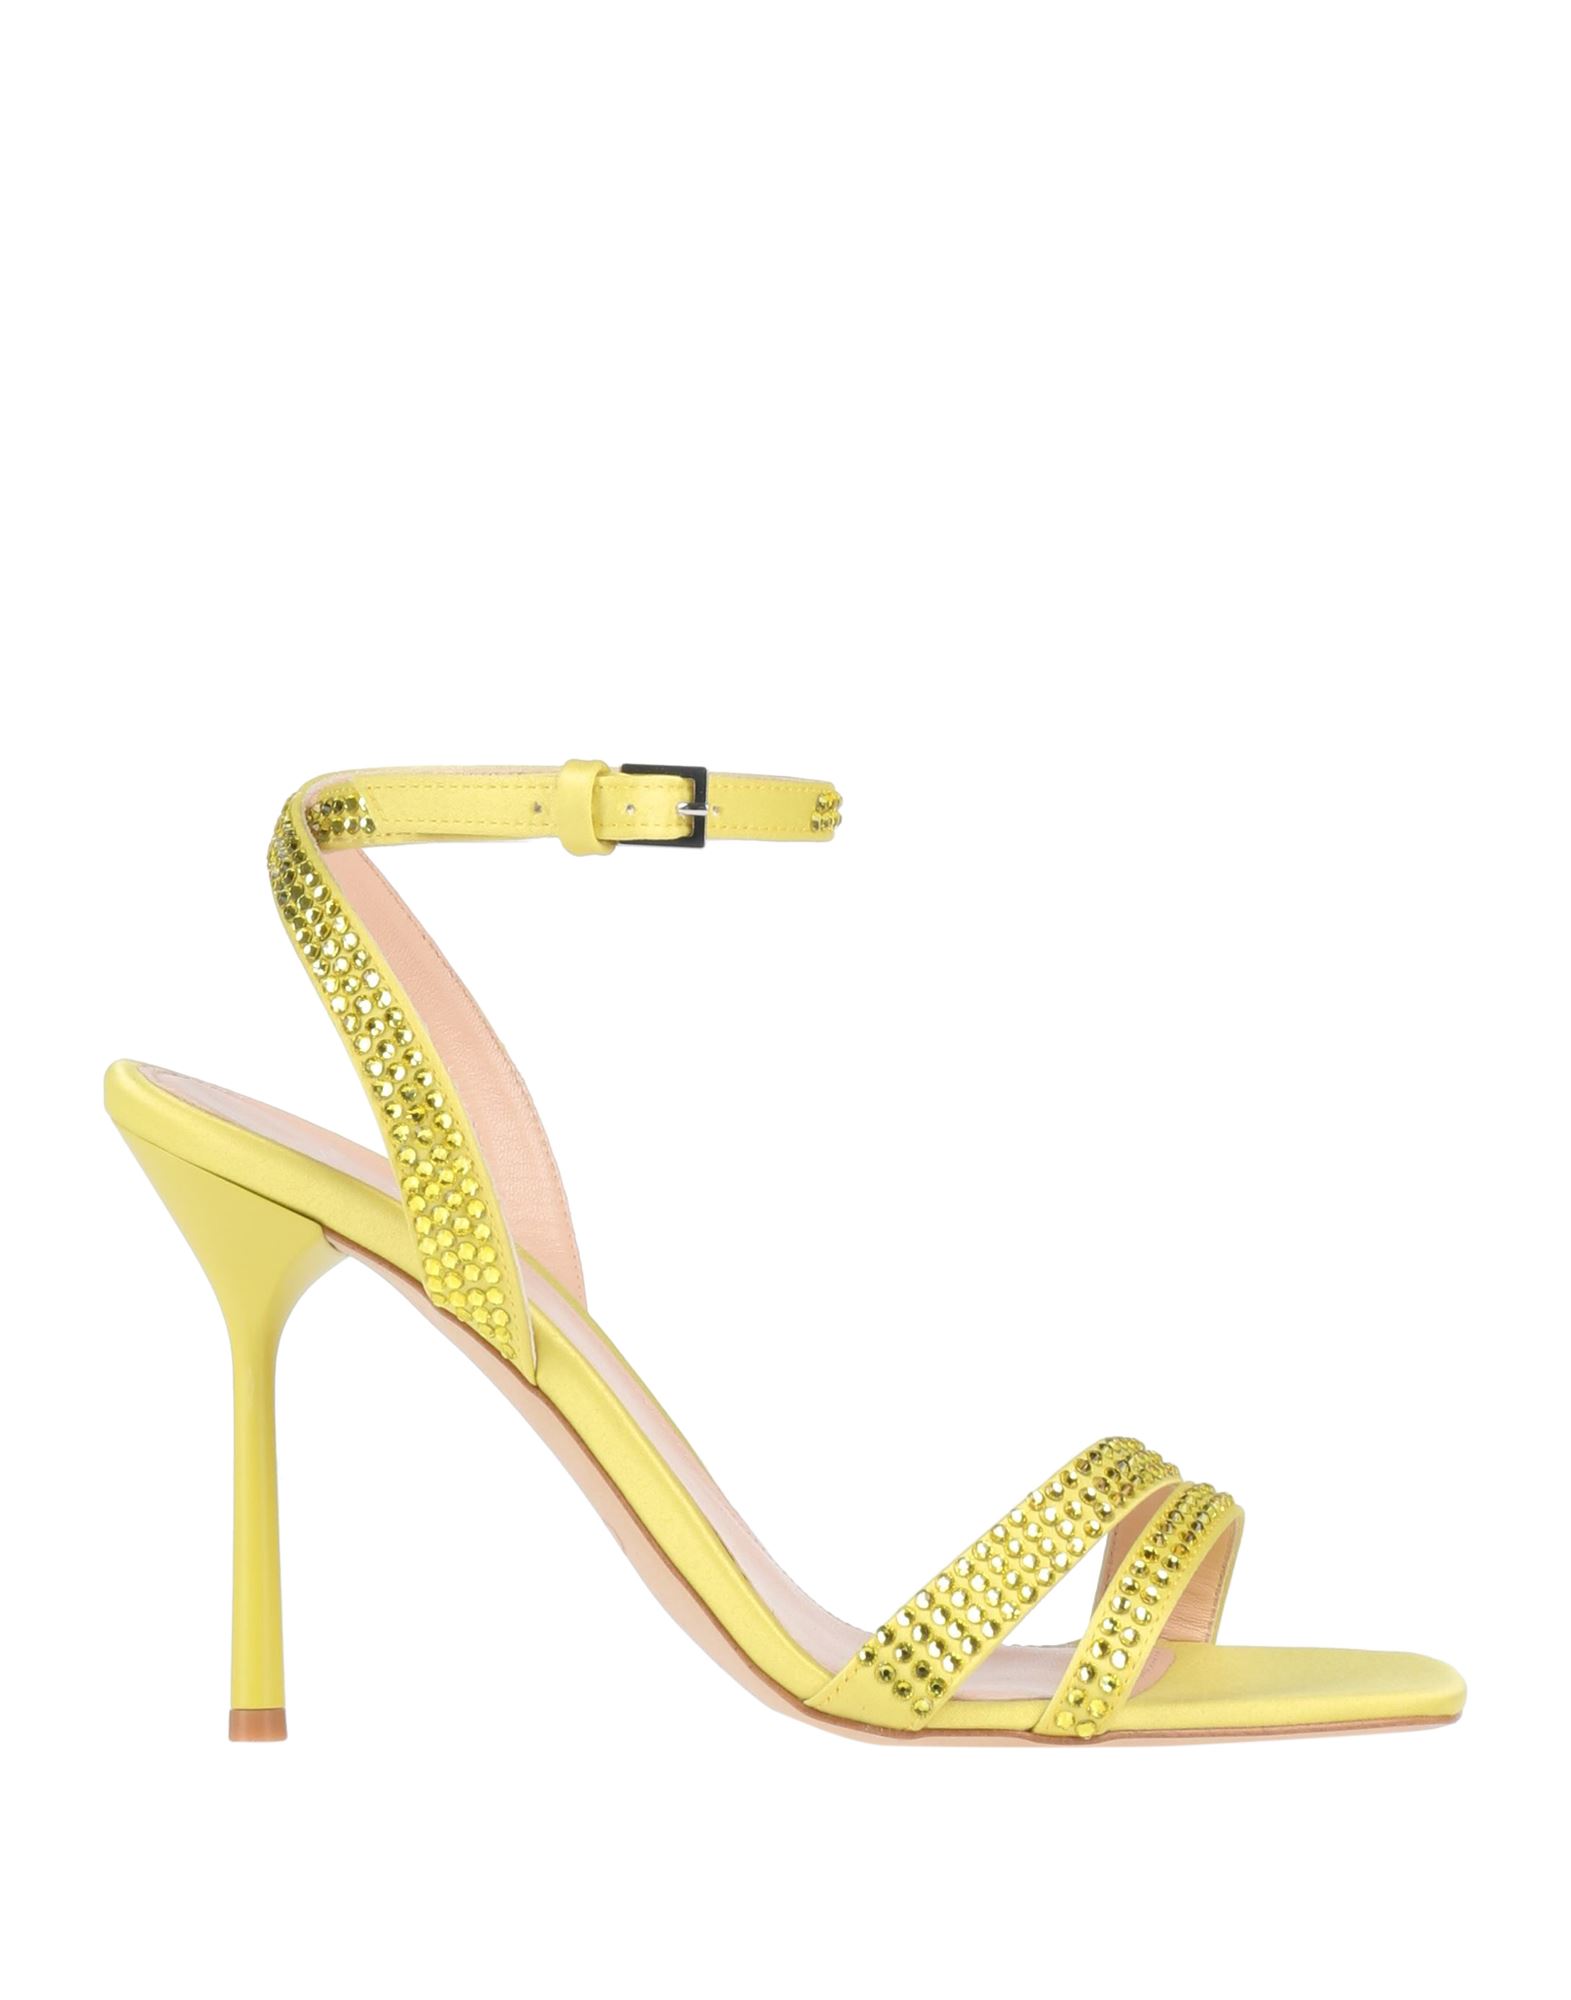 Liu •jo Sandals In Yellow